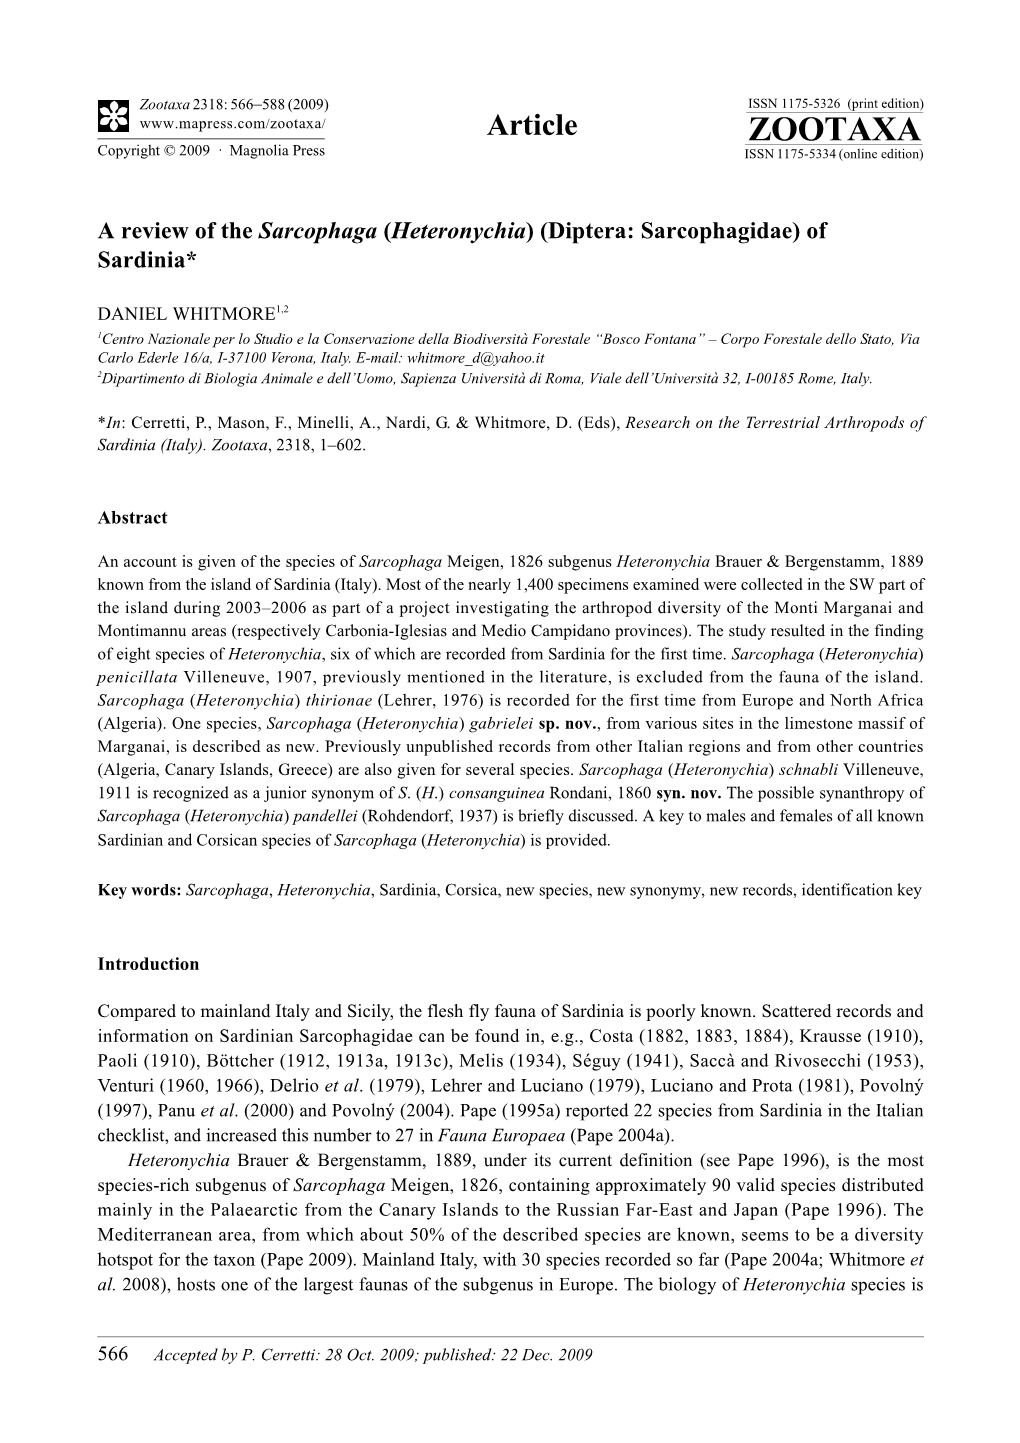 Zootaxa, a Review of the Sarcophaga (Heteronychia